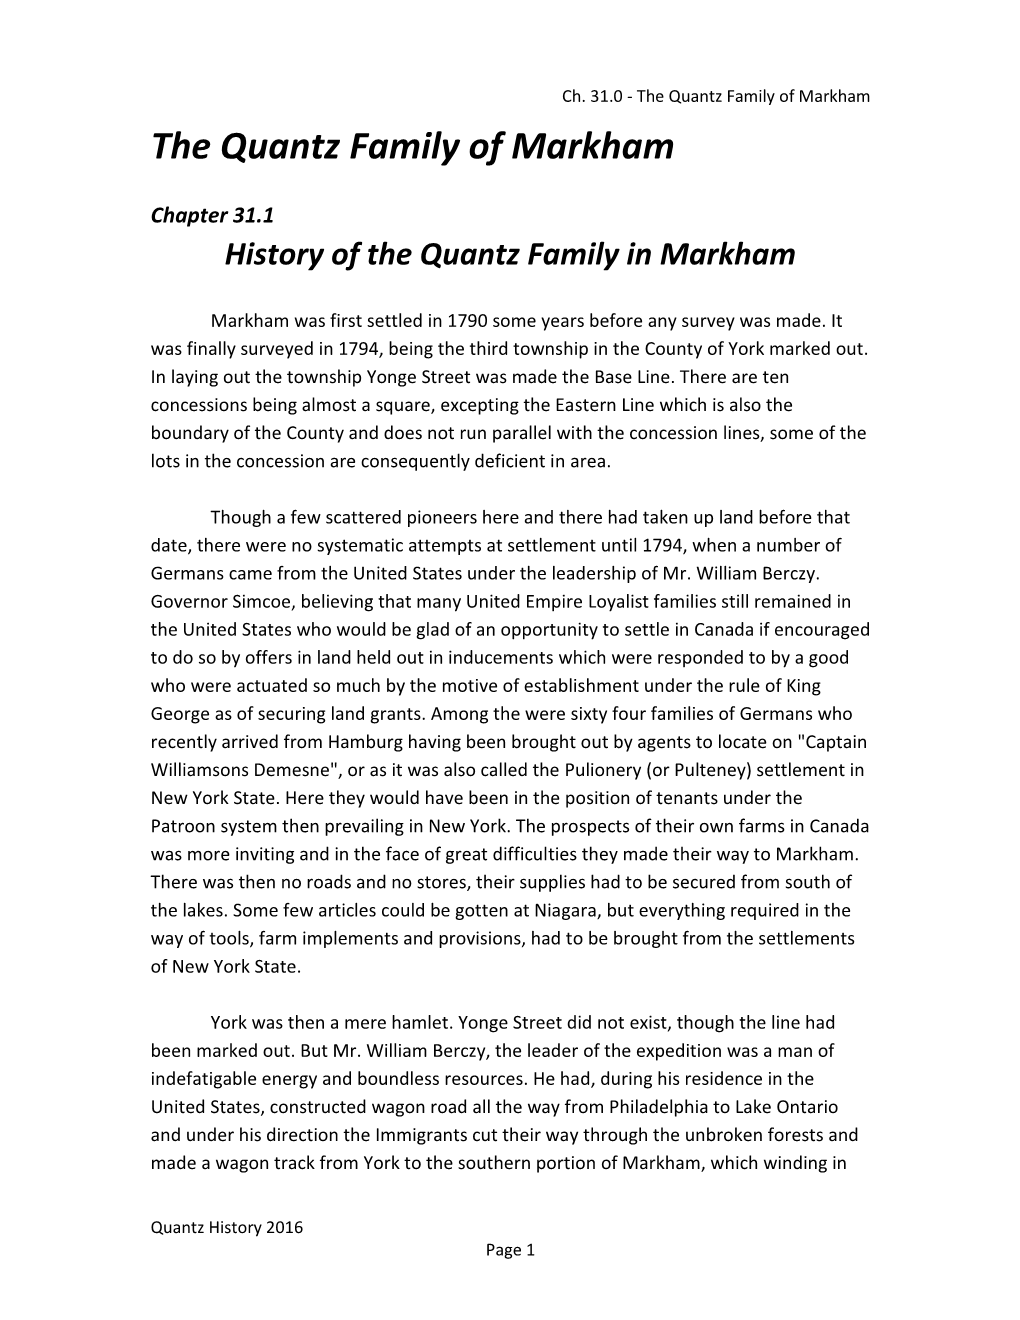 The Quantz Family of Markham the Quantz Family of Markham